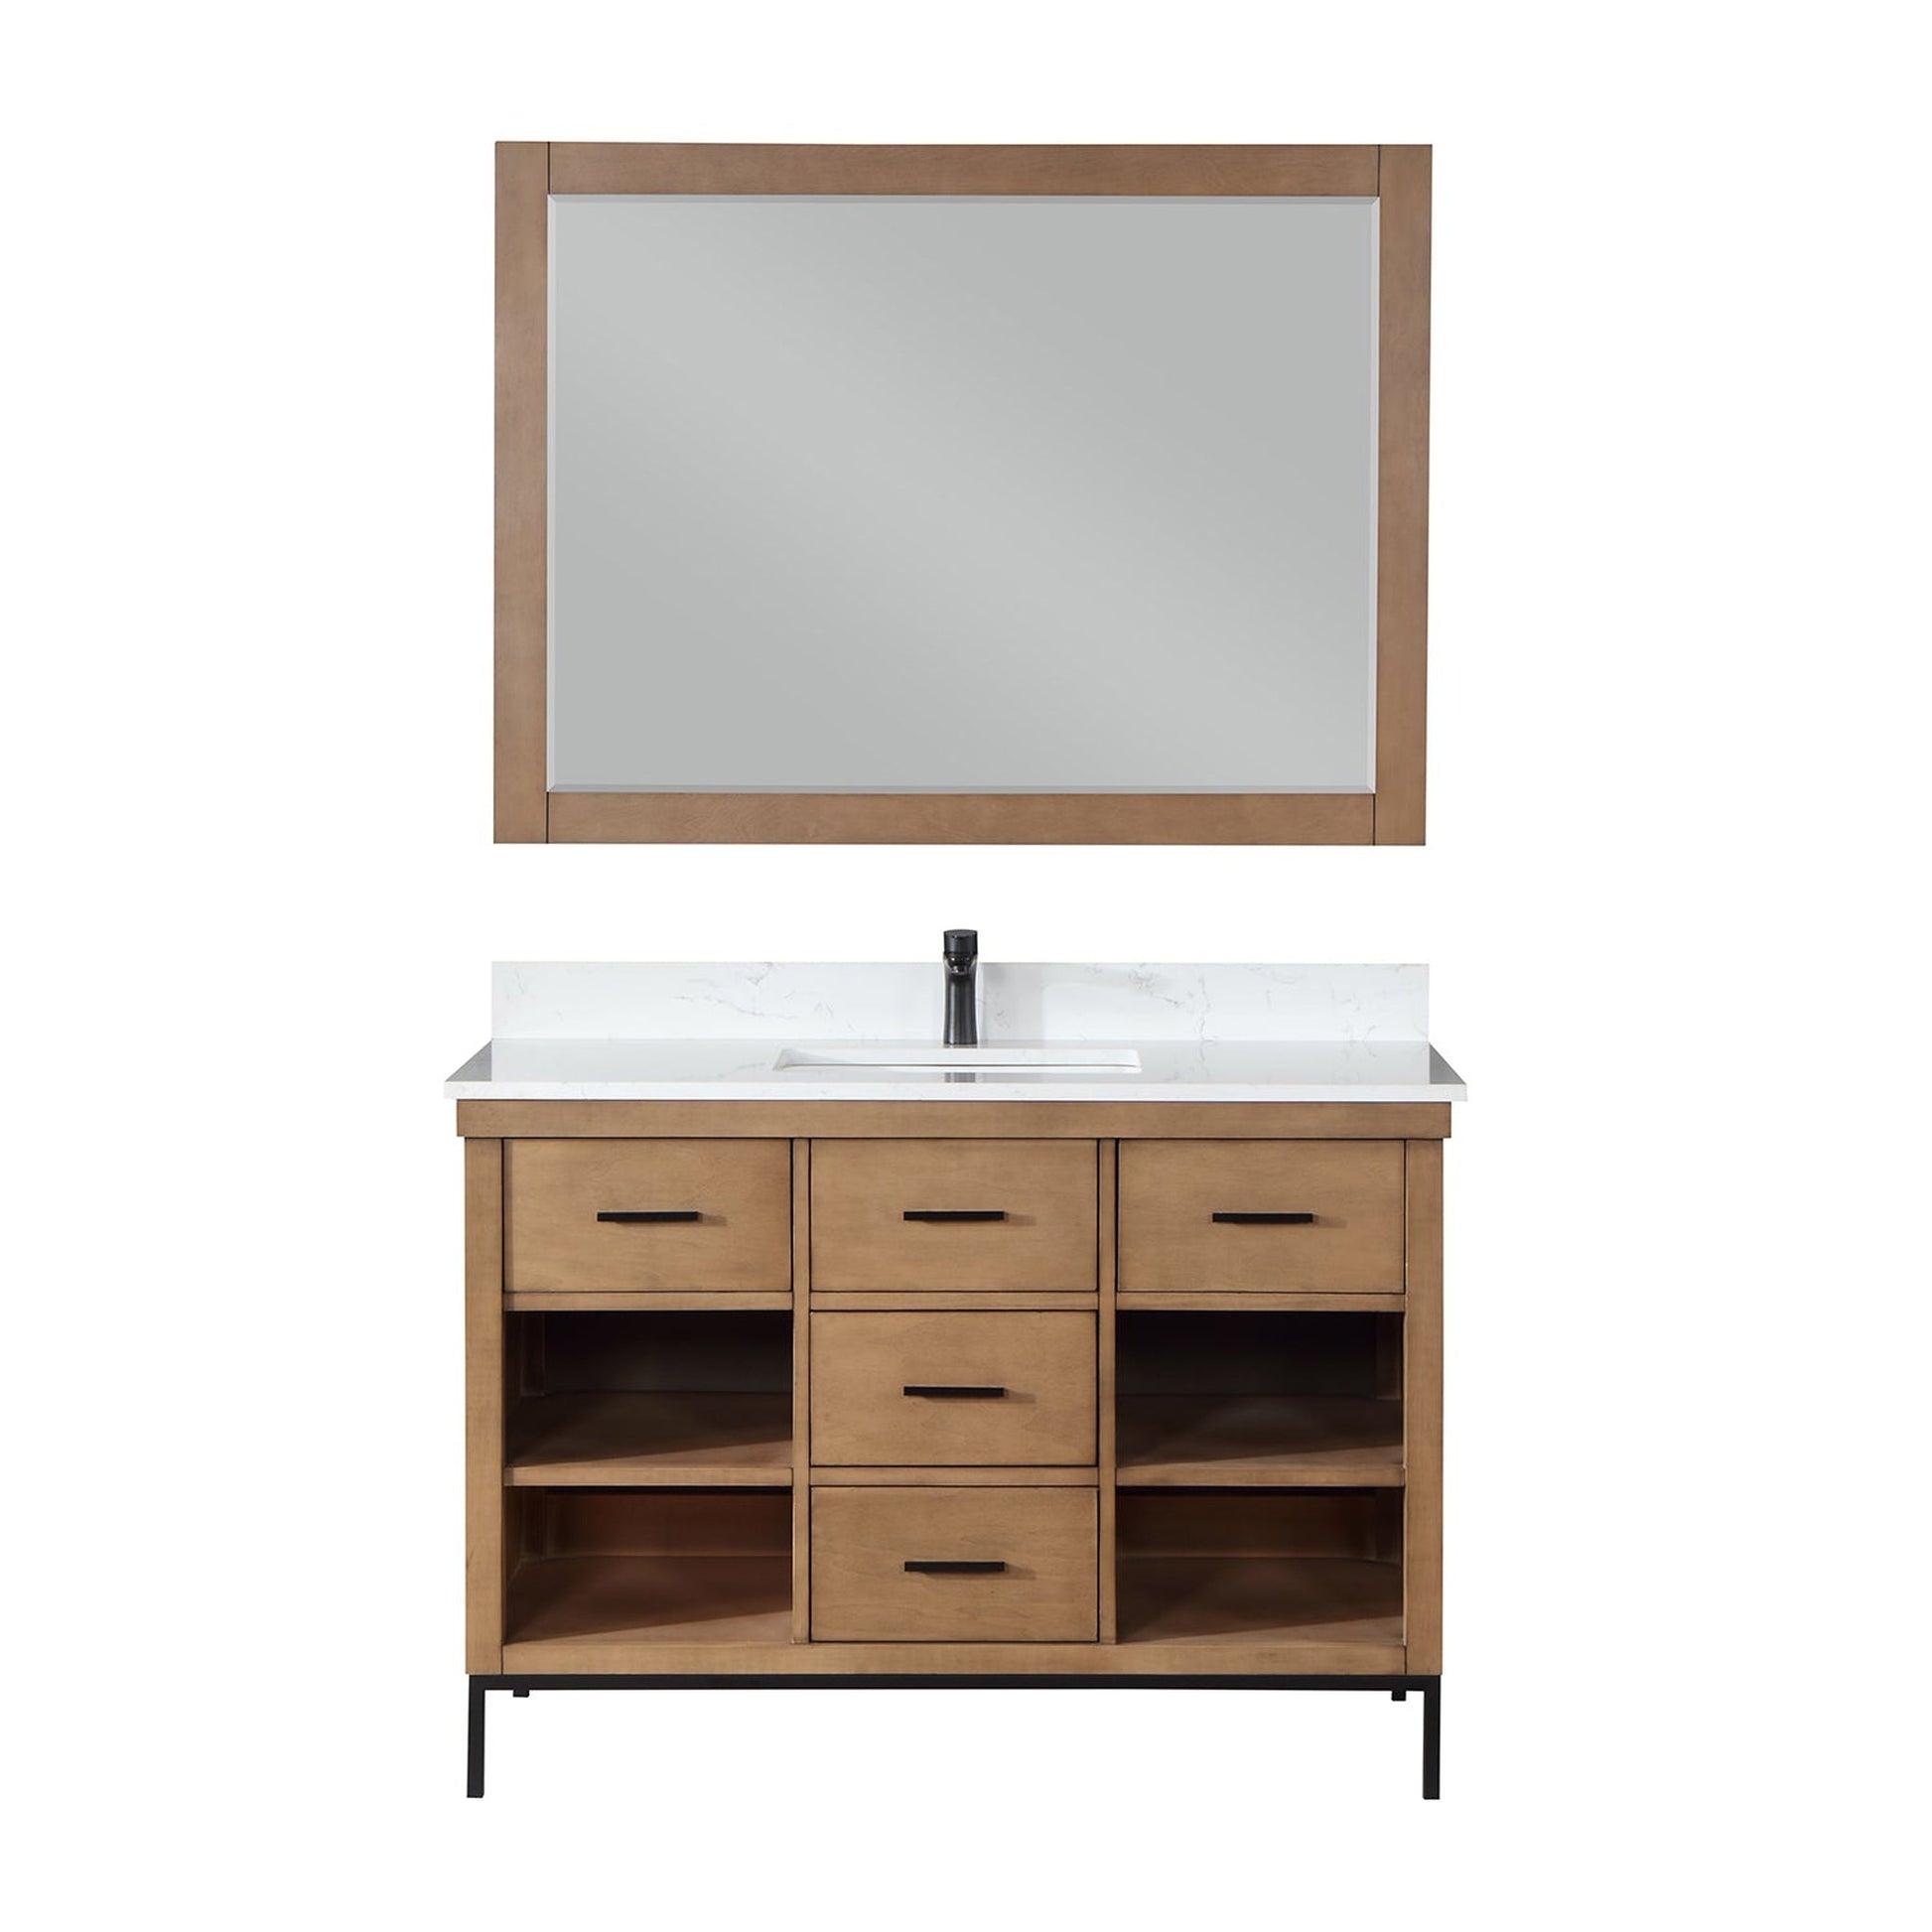 Altair Kesia 48" Brown Pine Freestanding Single Bathroom Vanity Set With Mirror, Stylish Aosta White Composite Stone Top, Rectangular Undermount Ceramic Sink, Overflow, and Backsplash